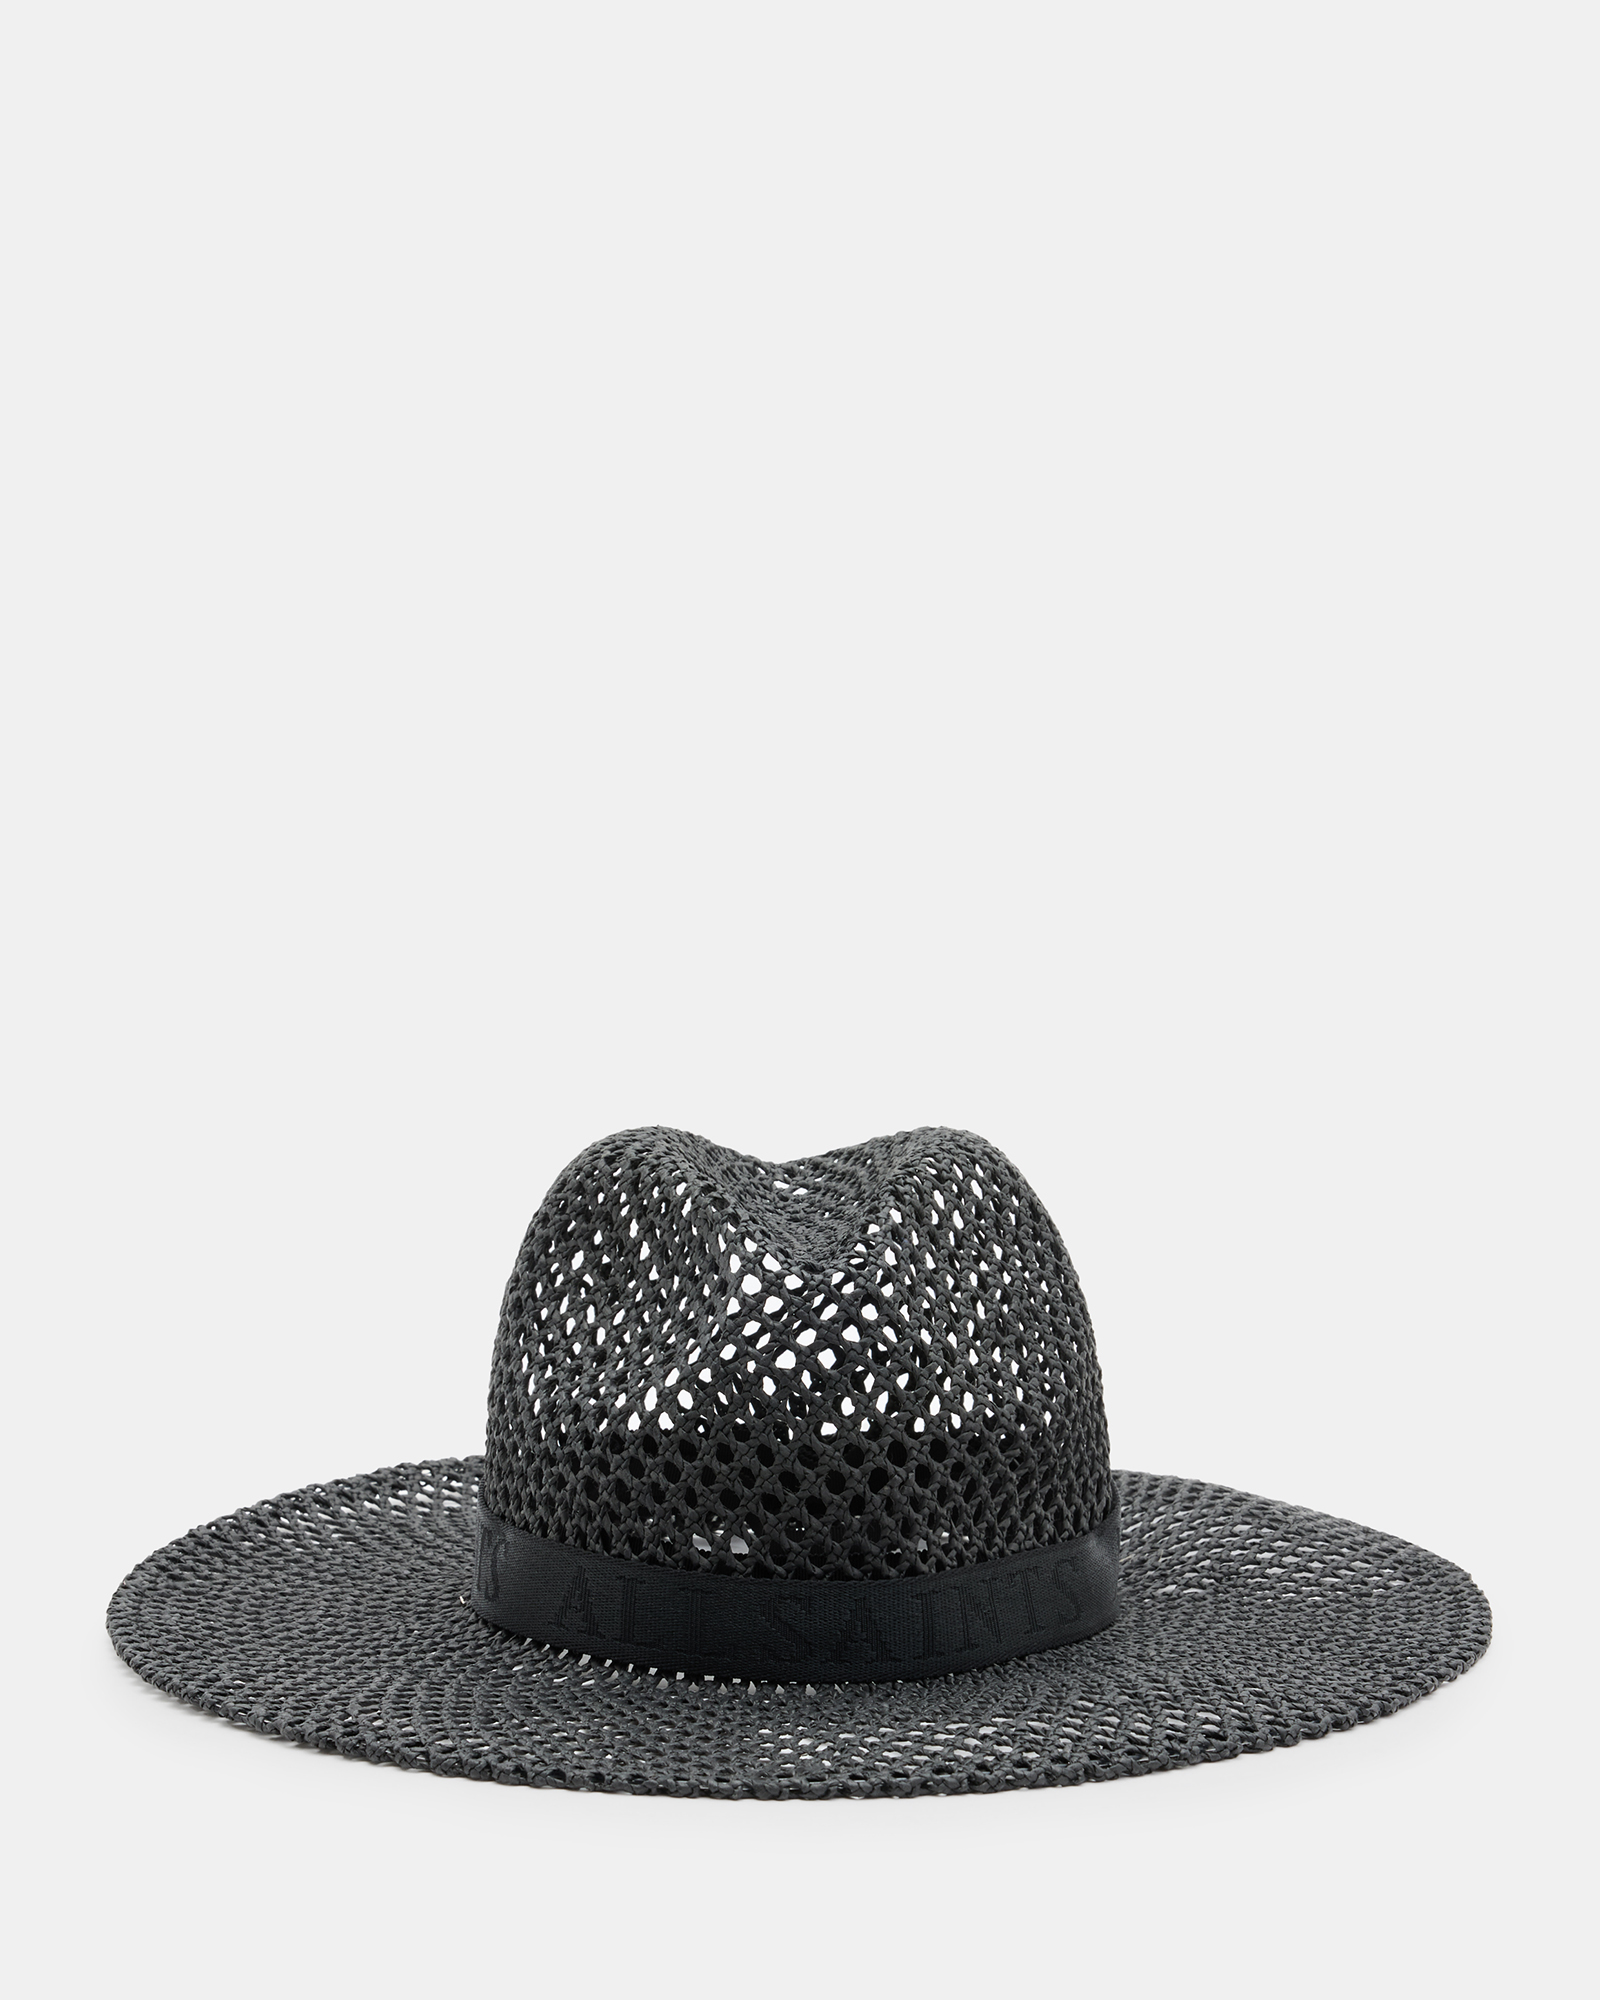 AllSaints Suvi Straw Fedora Hat,, Black